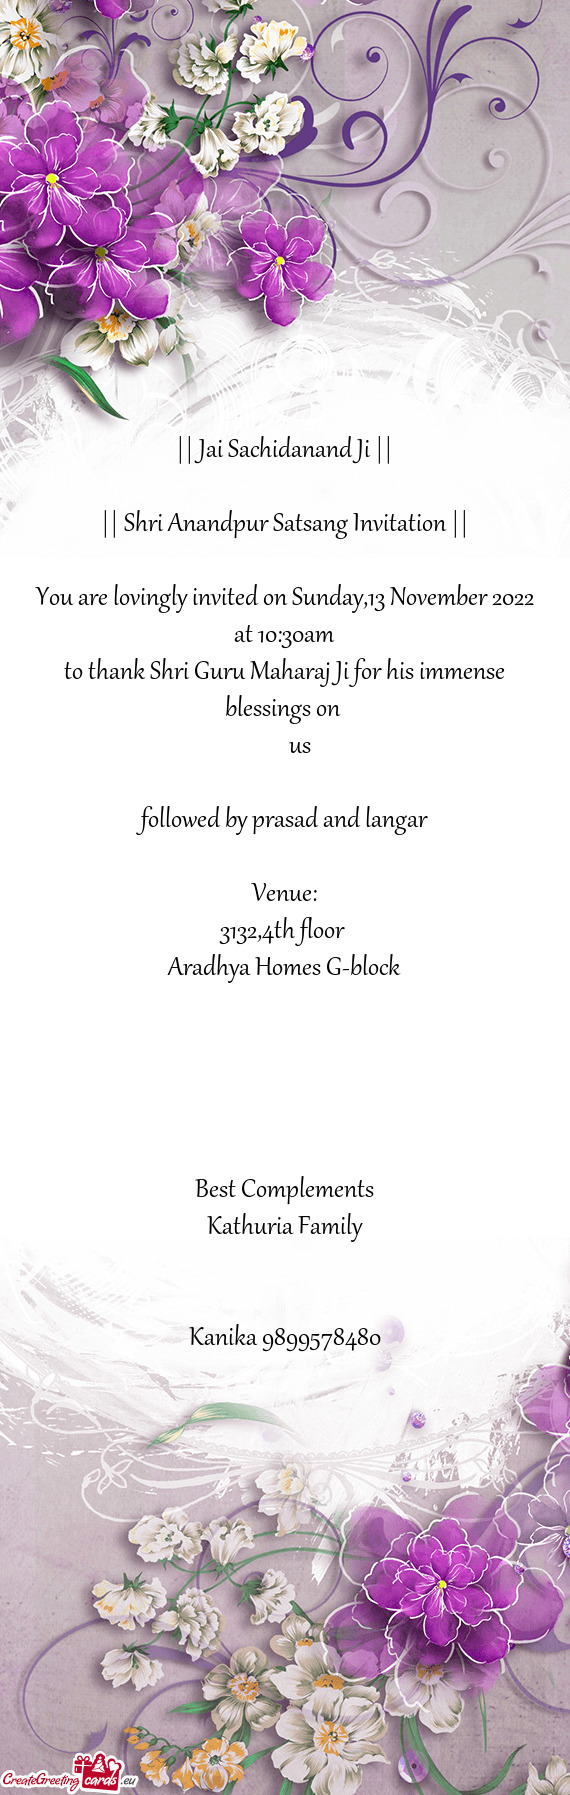 || Shri Anandpur Satsang Invitation ||